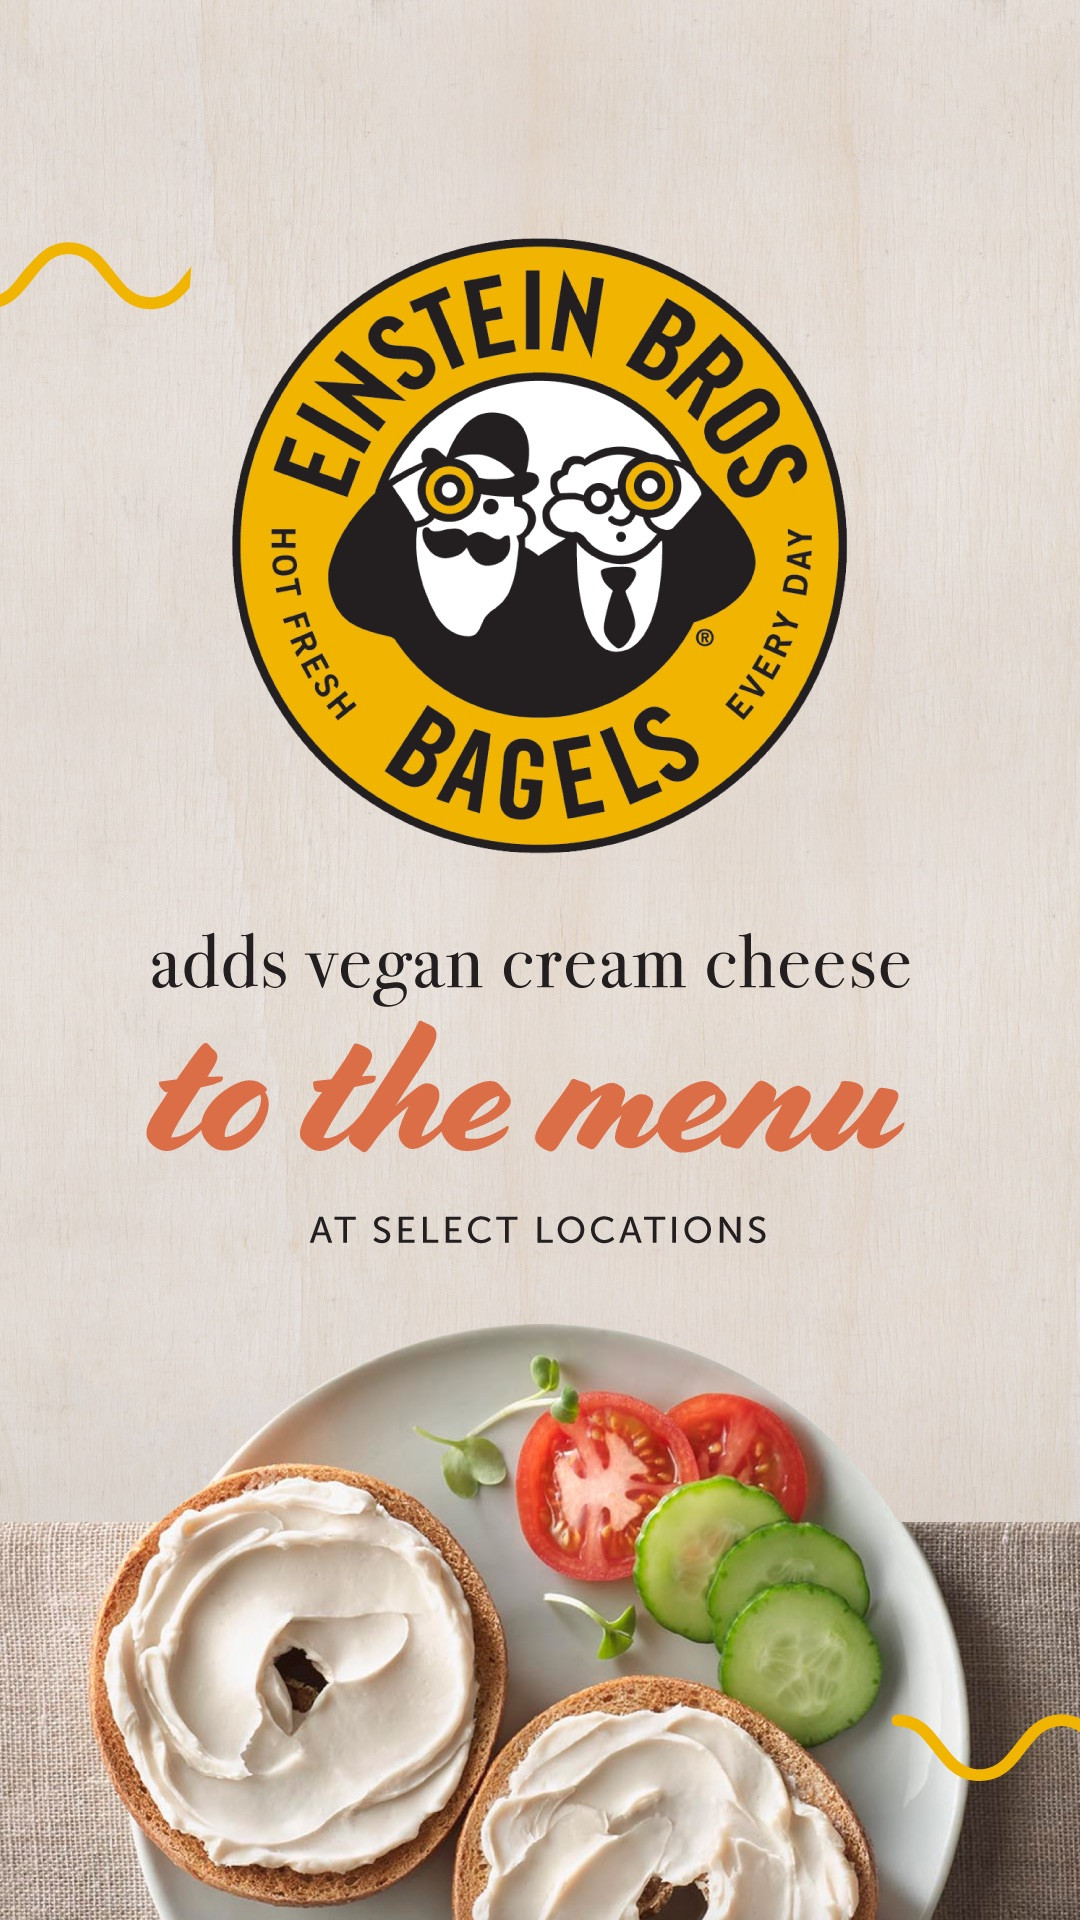 Vegan Options At Einstein Bagels
 Einstein Bros Bagels Adds Vegan Cream Cheese at Select